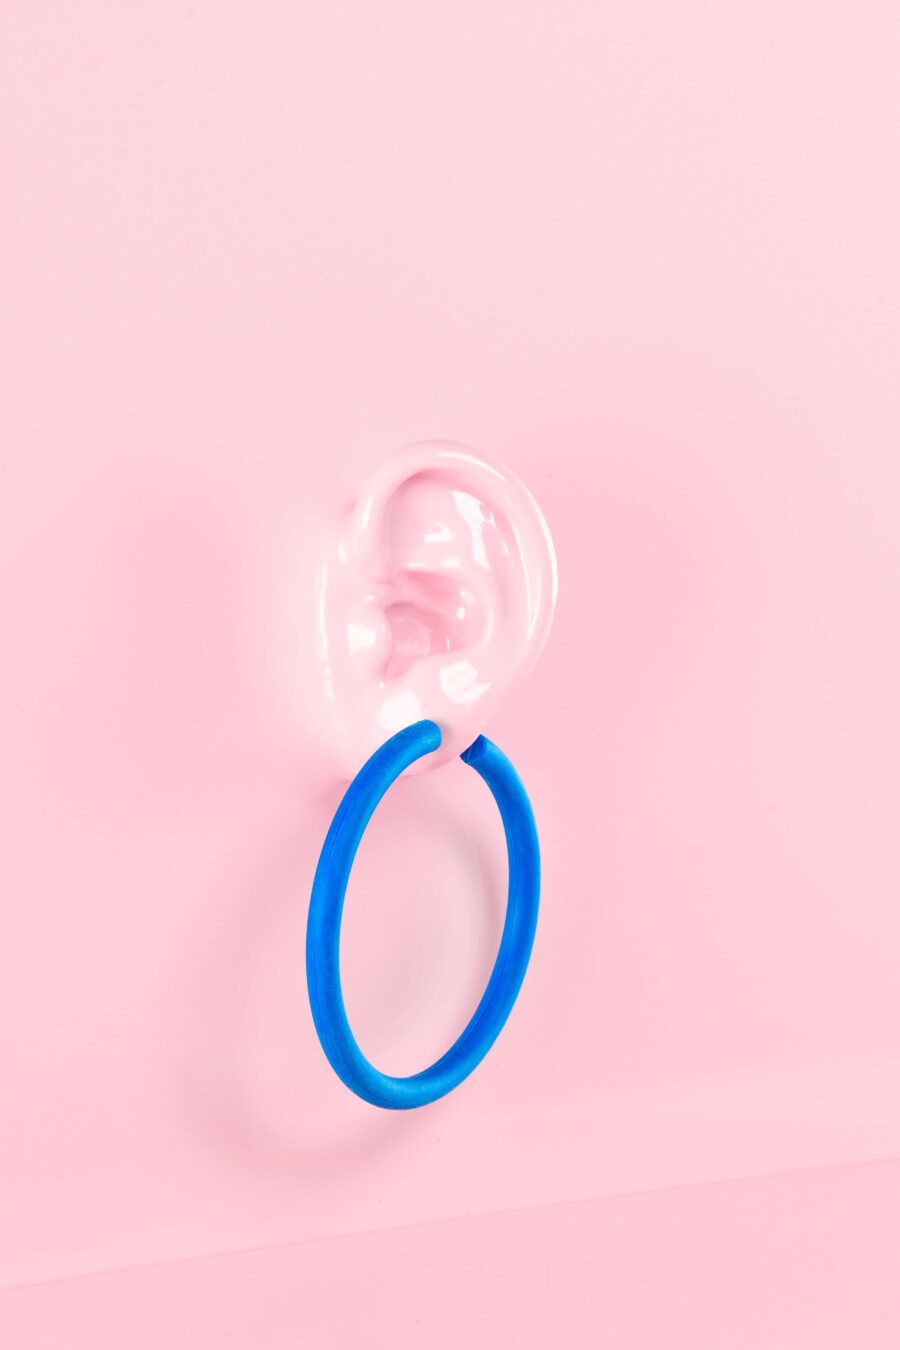 Cobalt blue statement hoop earrings on a pink background.